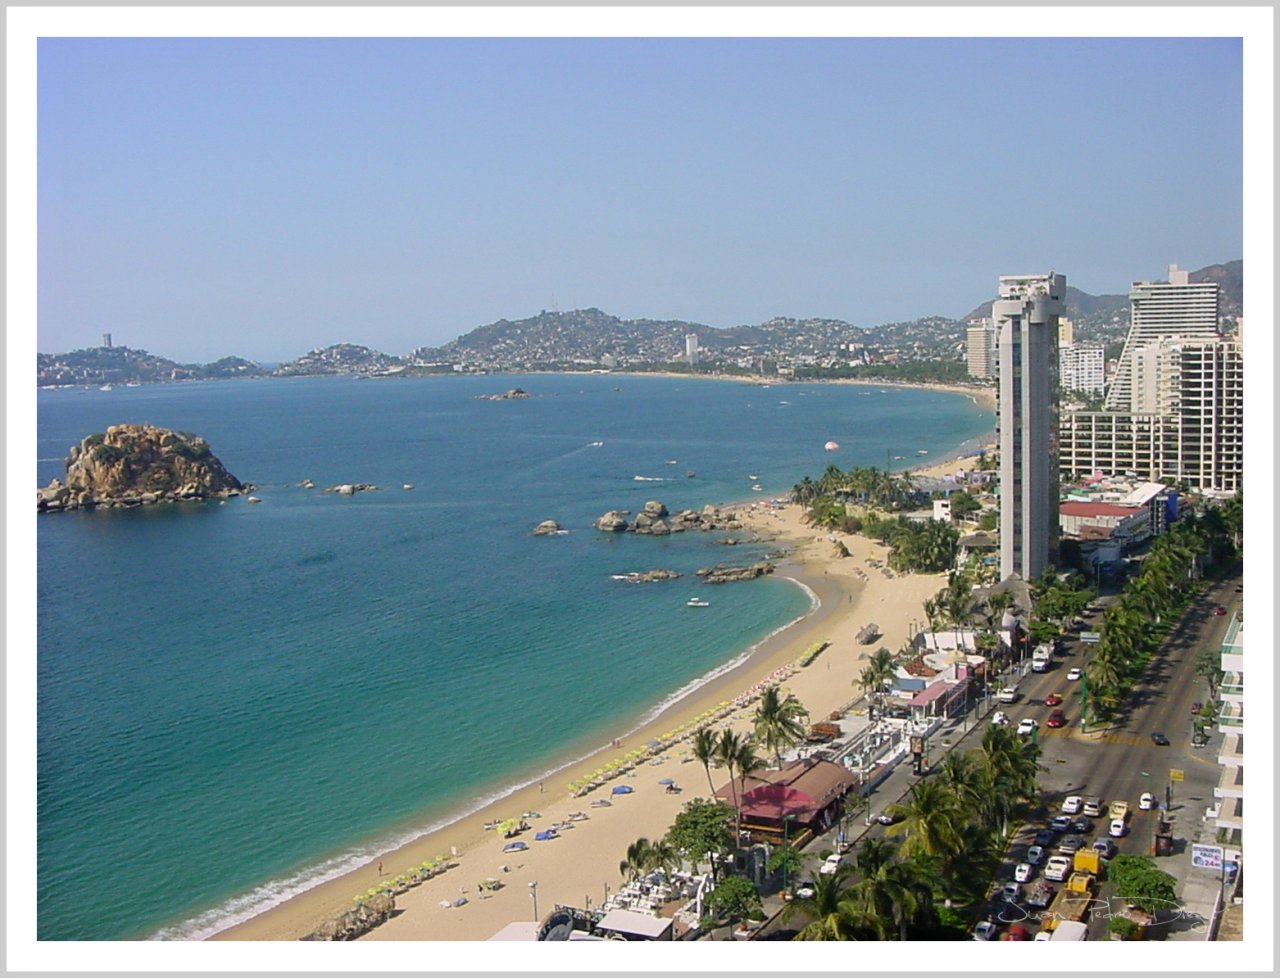 Acapulco, Visit Mexico